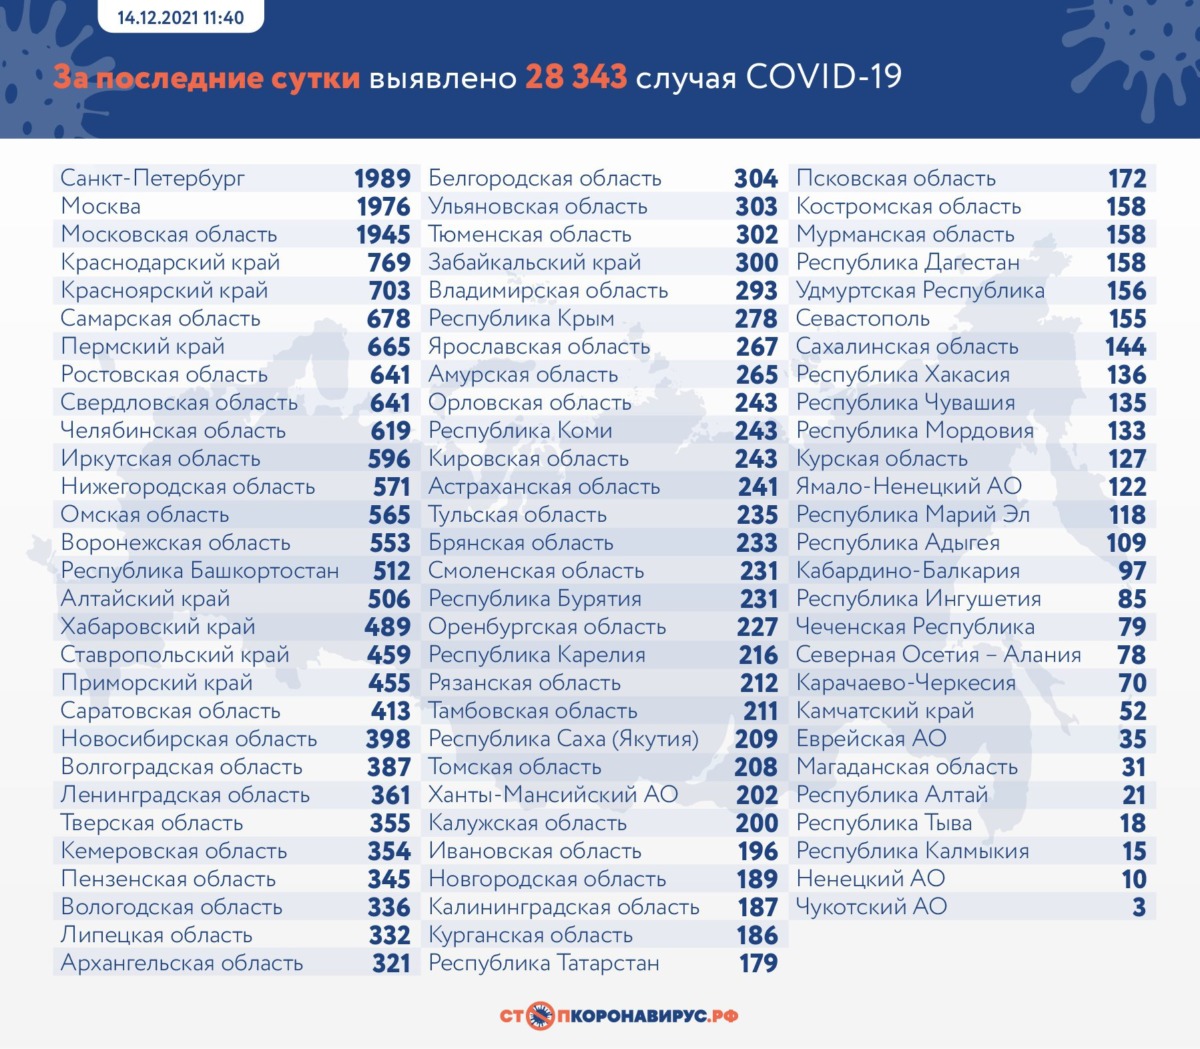 Оперативная статистика по коронавирусу в России на 14 декабря